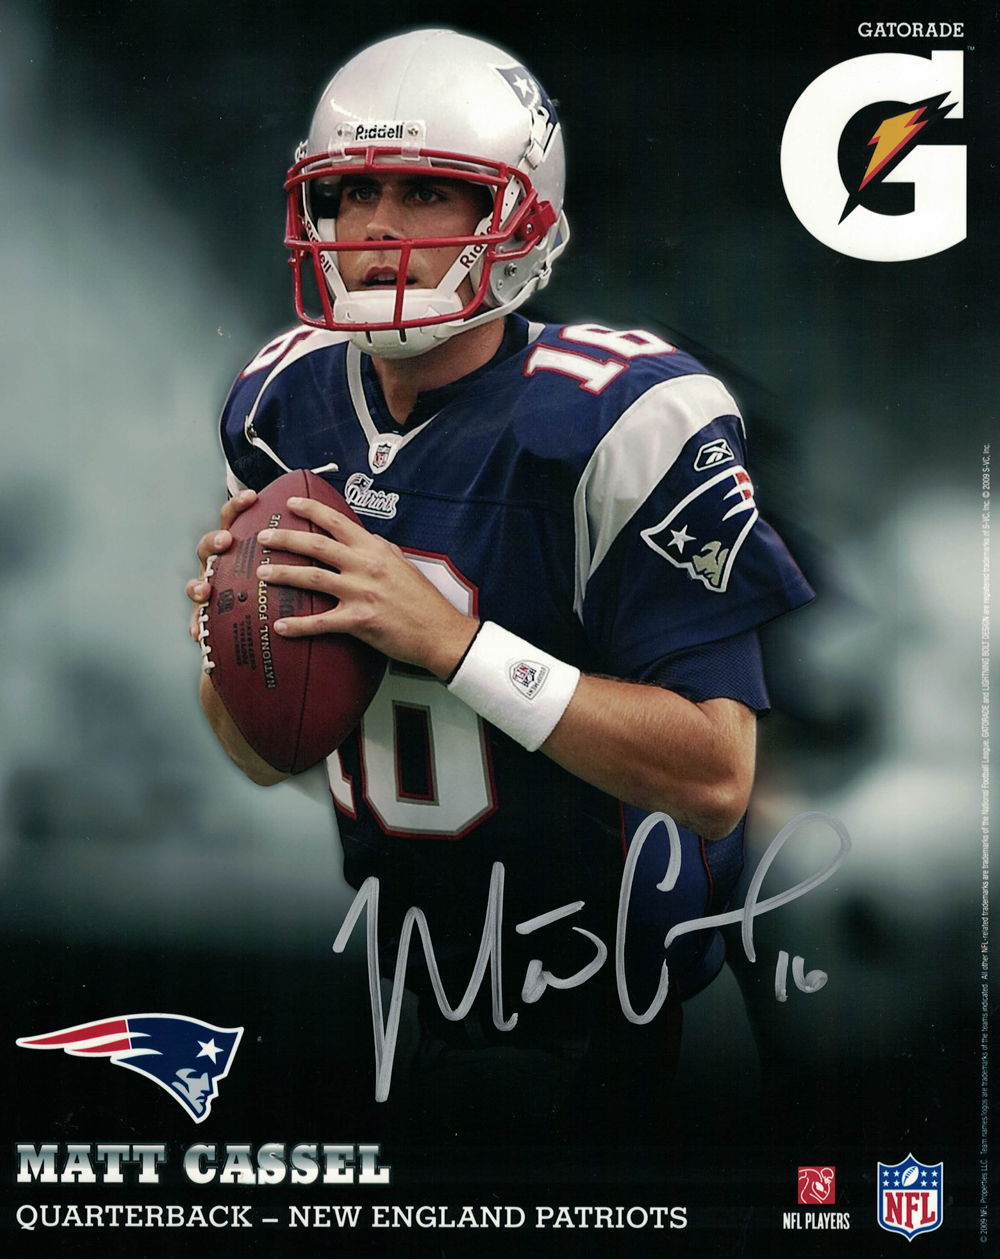 Matt Cassel Autographed/Signed New England Patriots 8x10 Photo 30233